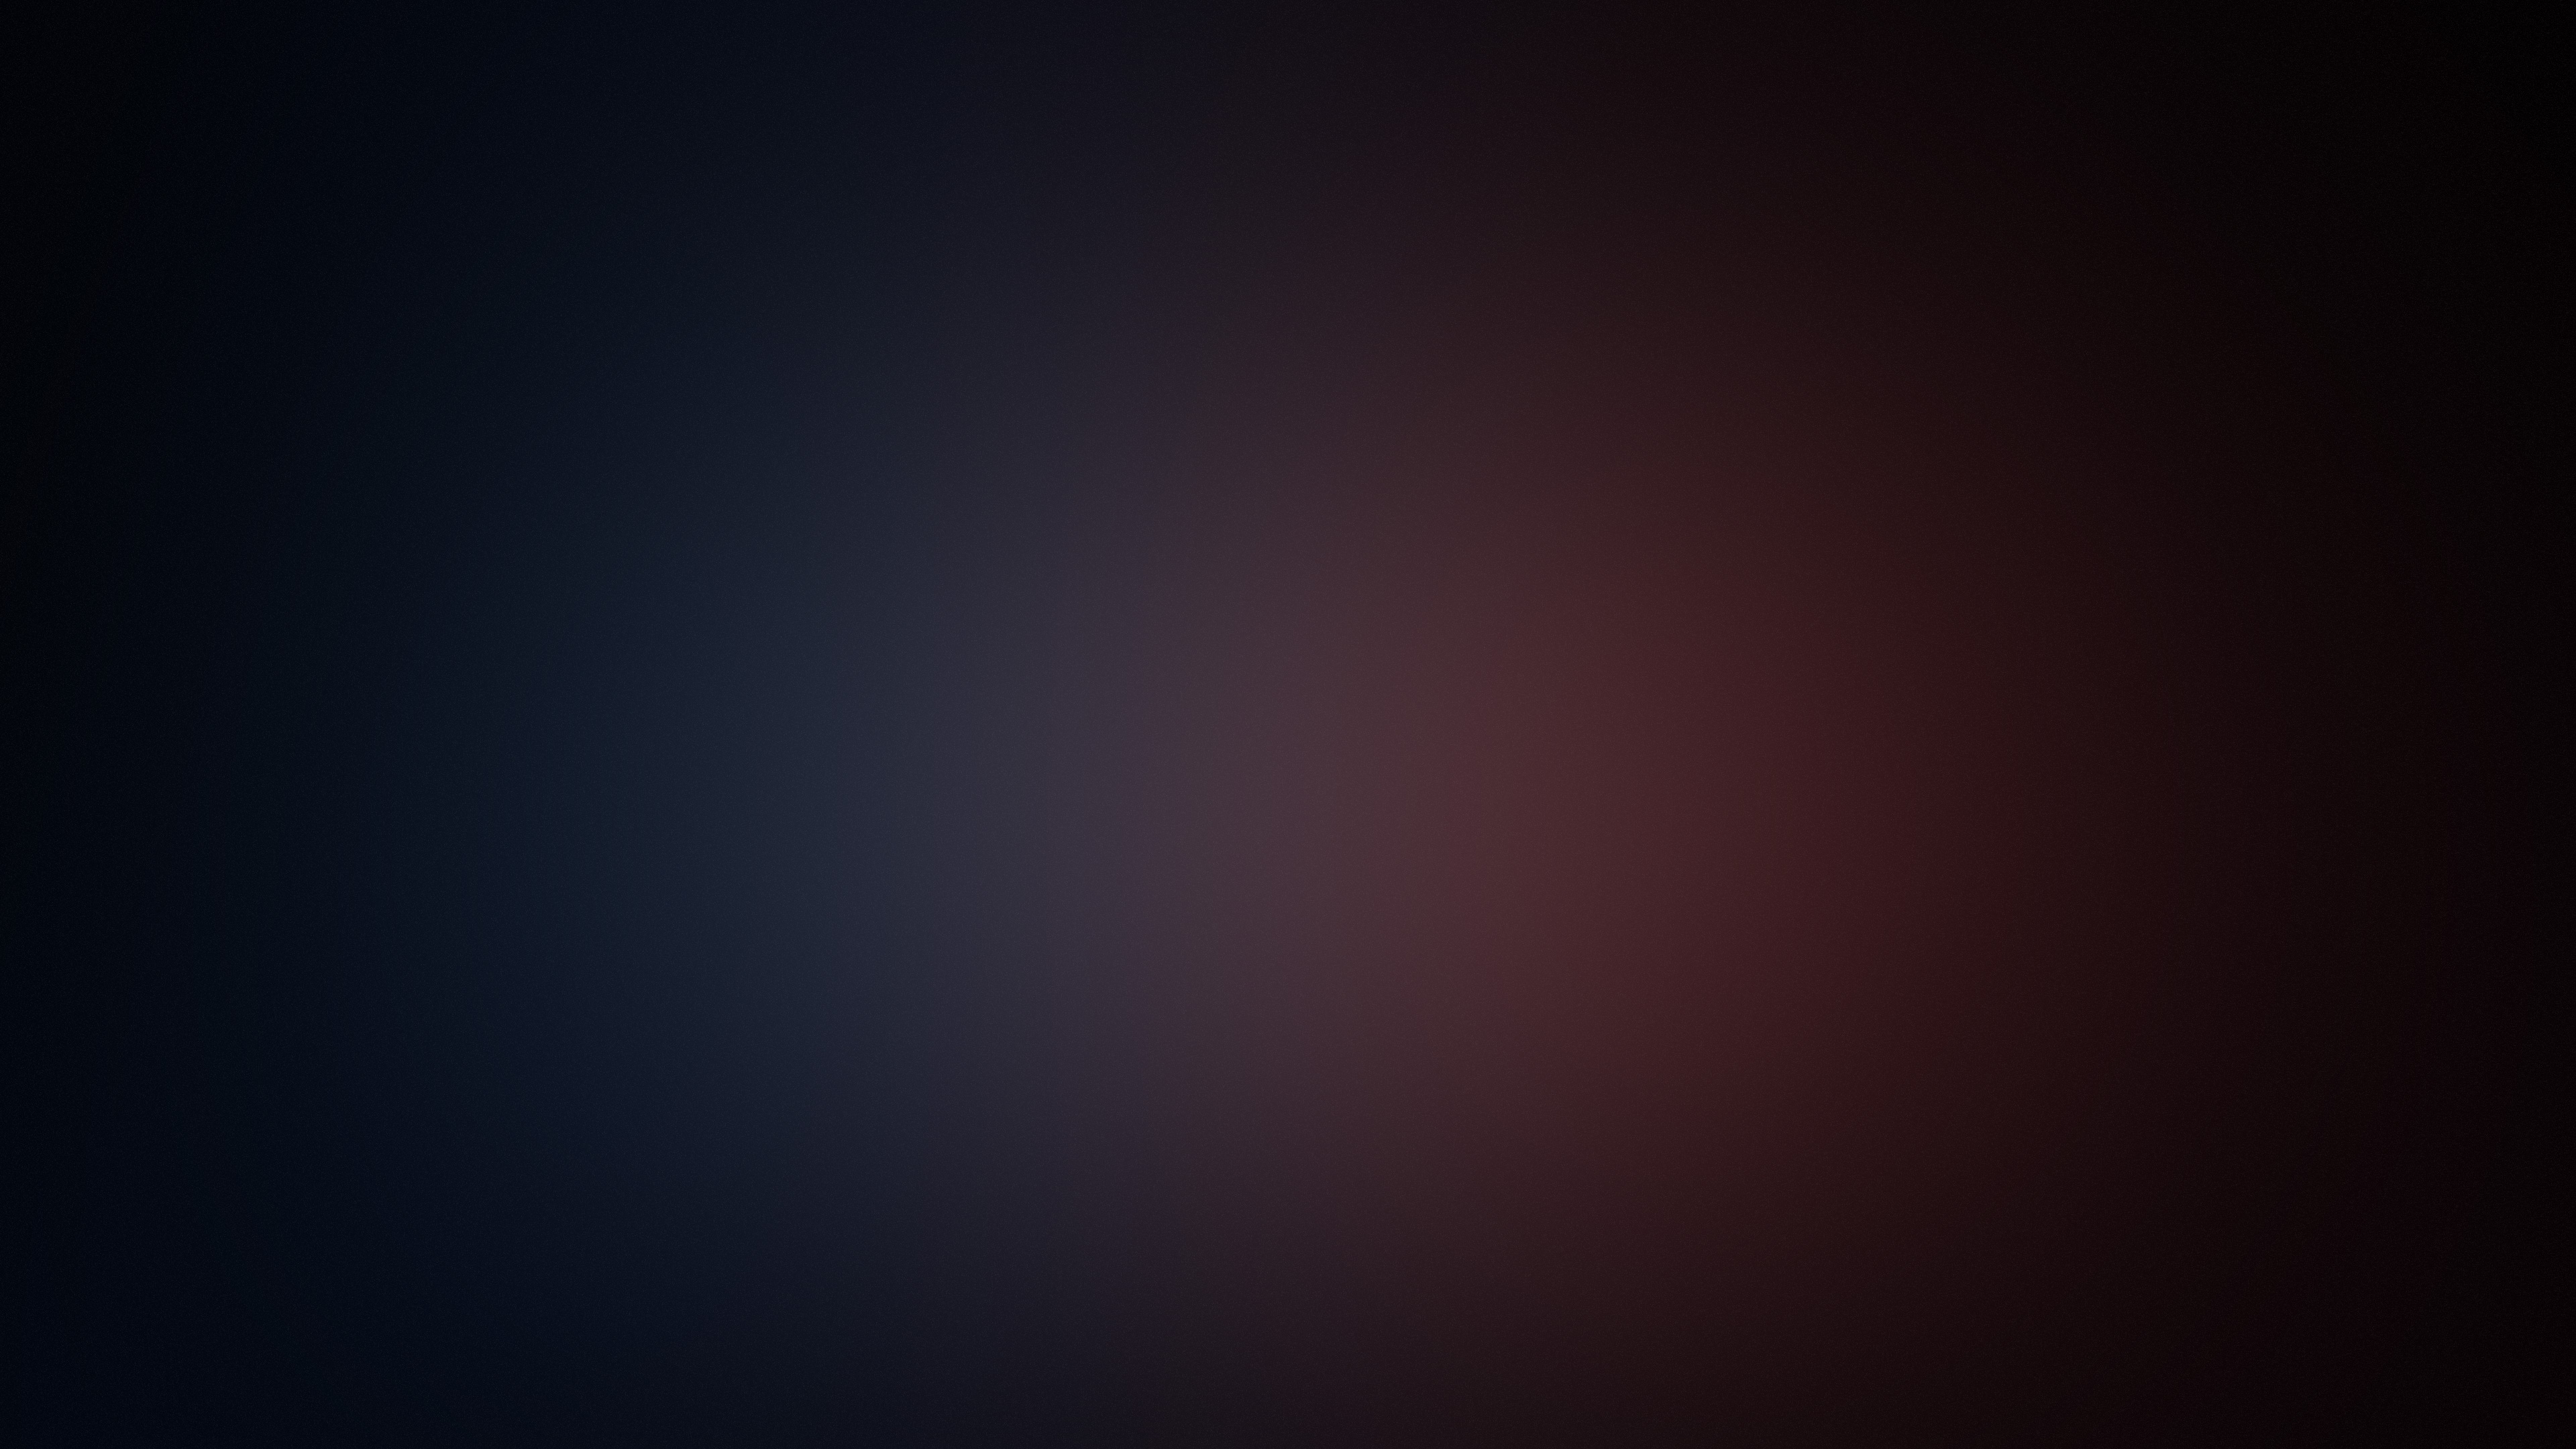 Simple Subtle Abstract Dark Minimalism 4k, HD Artist, 4k